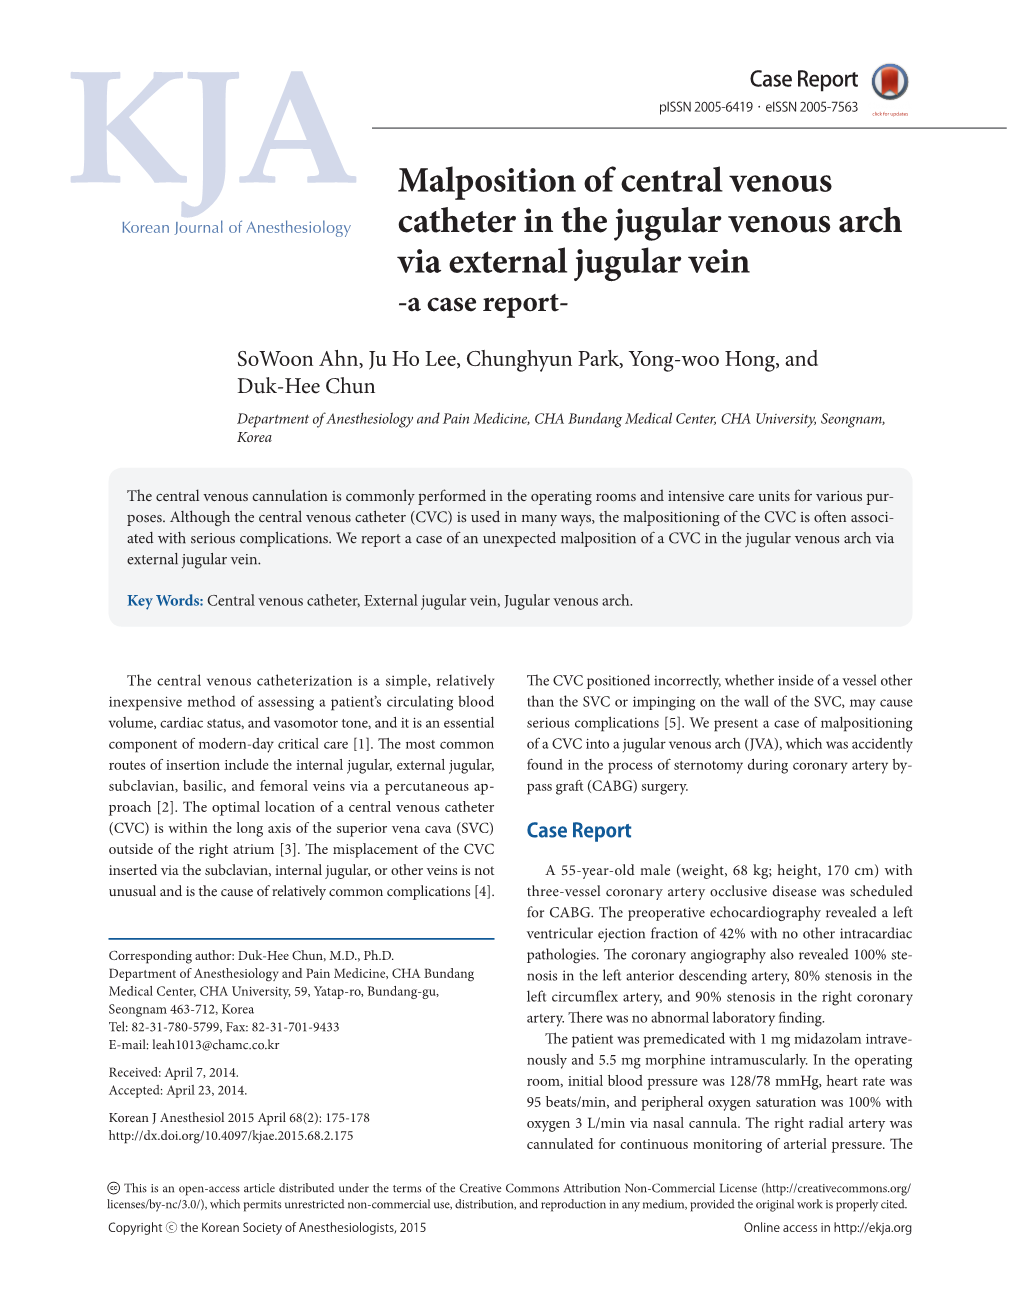 Malposition of Central Venous Catheter in the Jugular Venous Arch Via